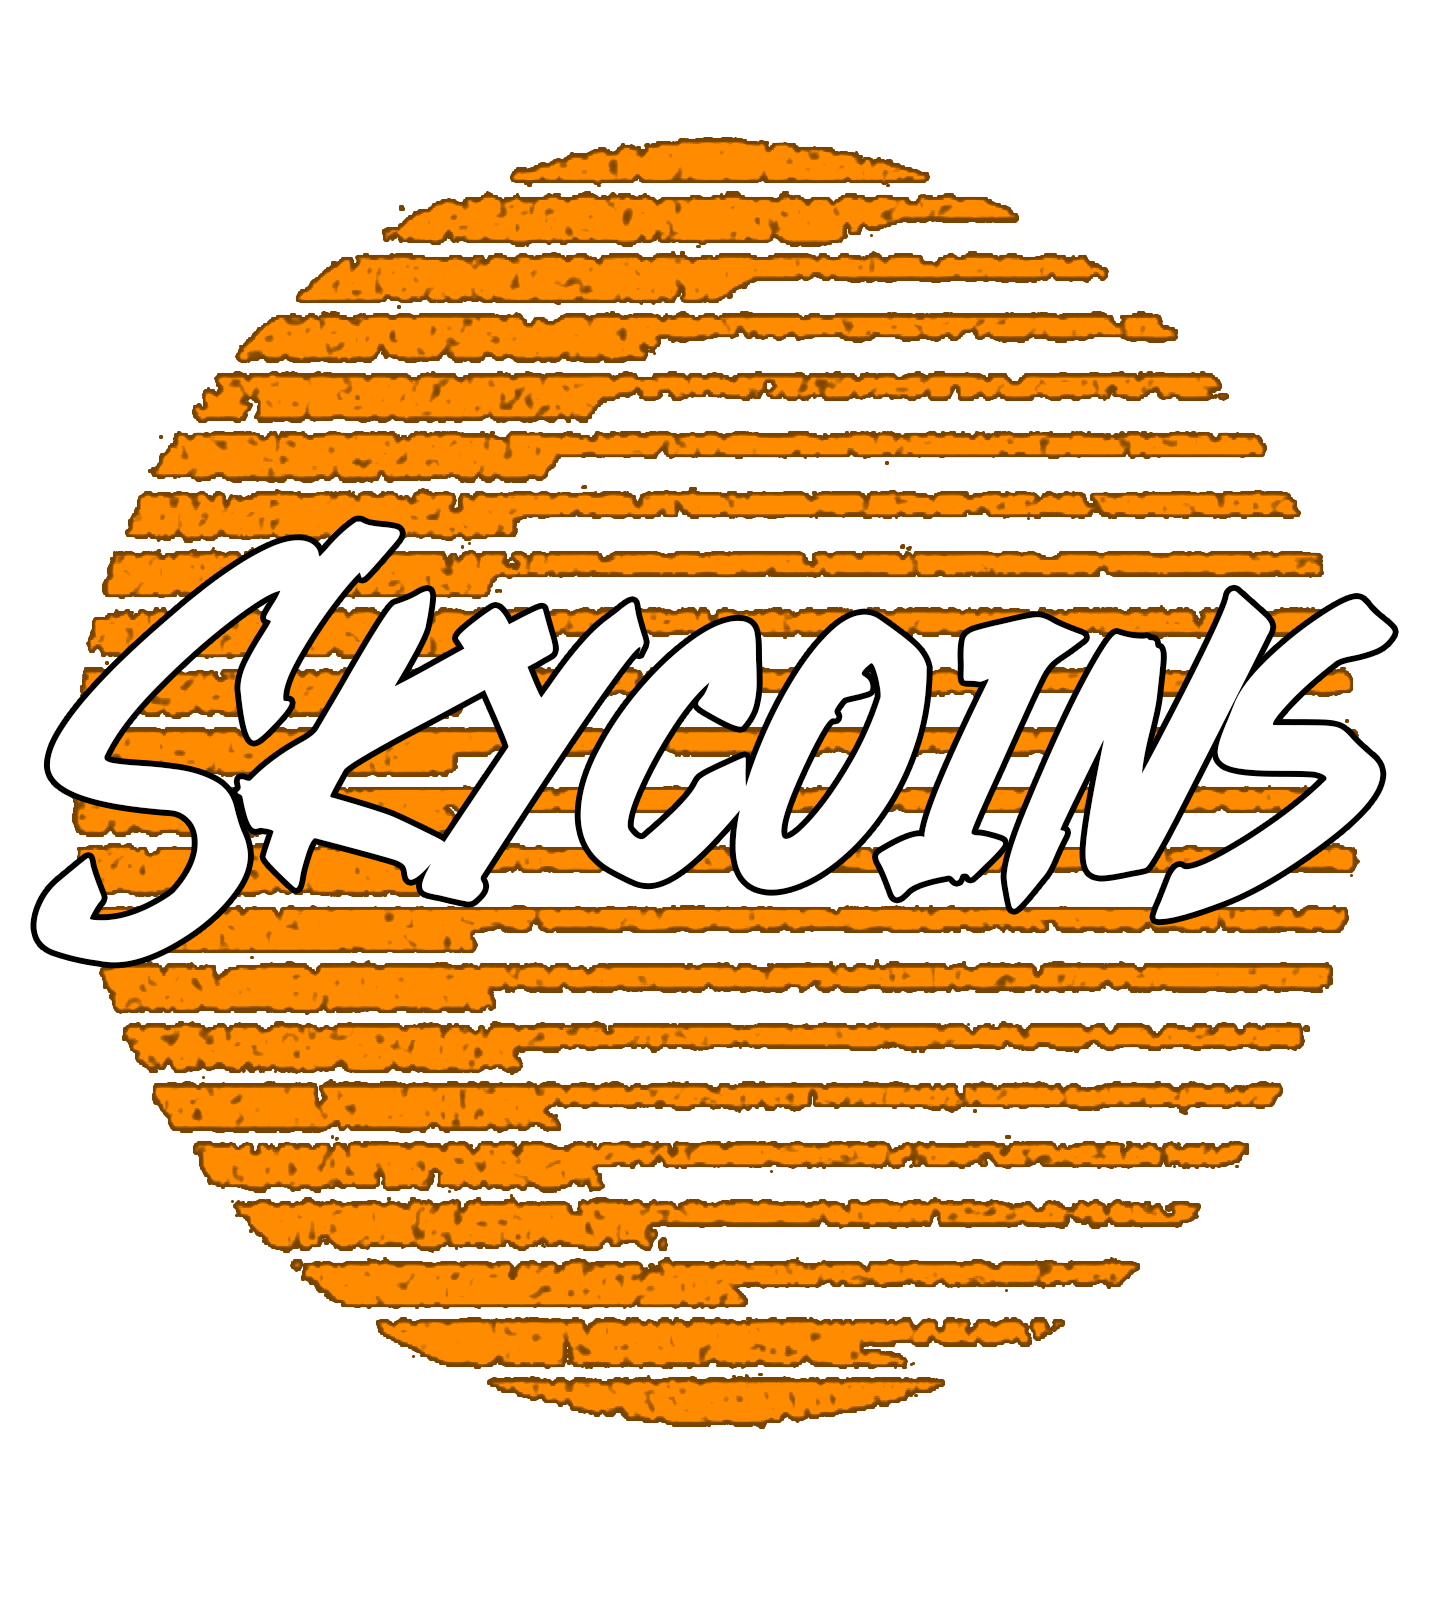 Skycoins - Valhalla